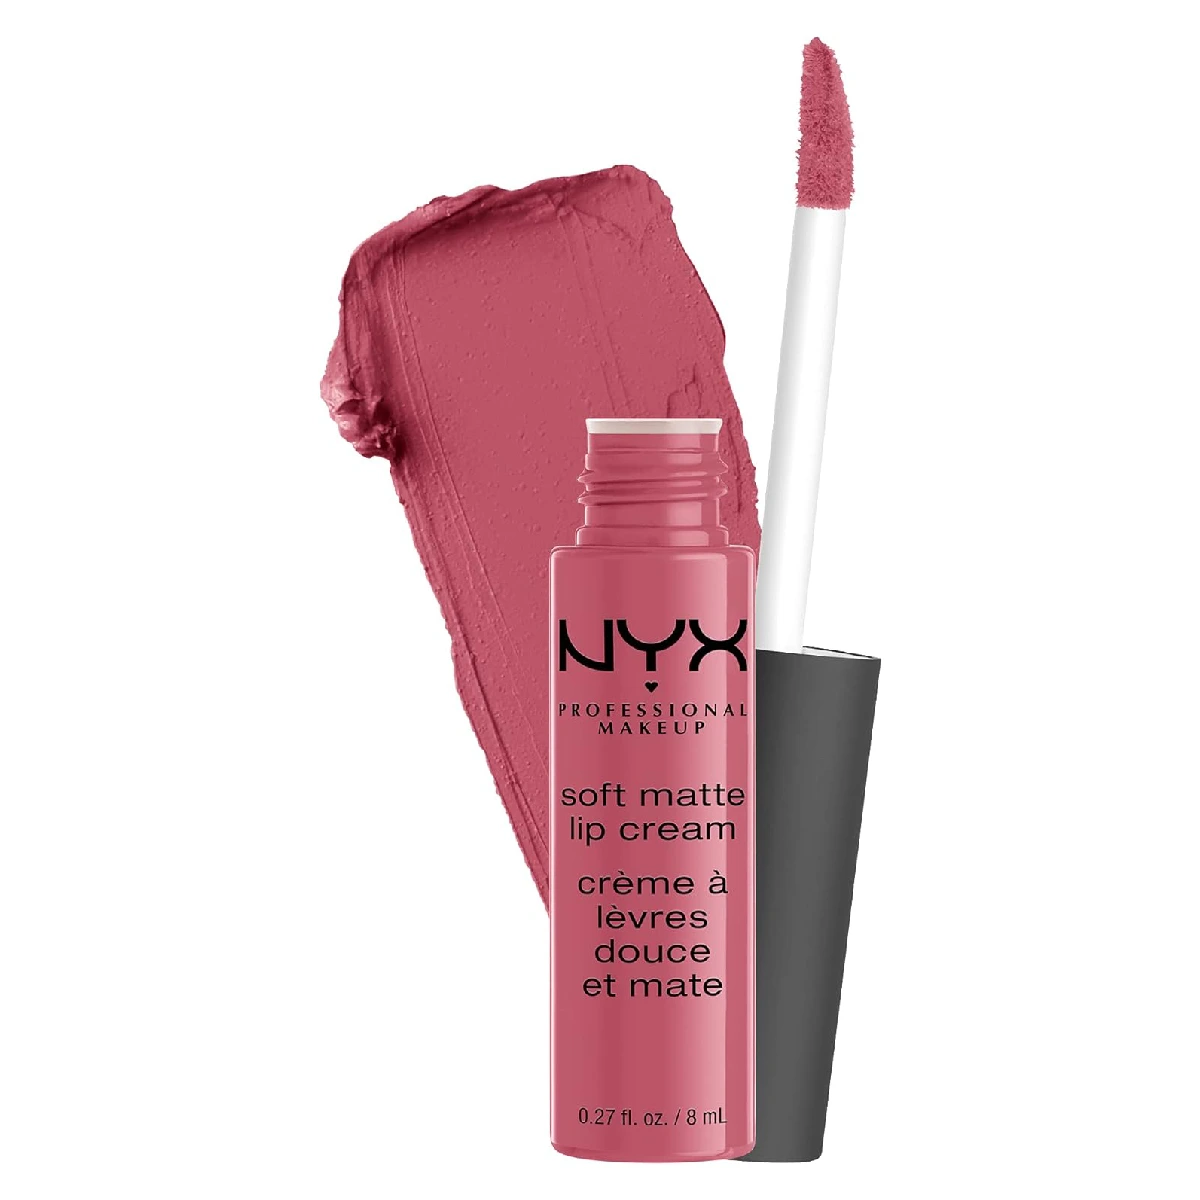 NYX Soft Matte Lip Cream - A tube of matte lip cream against a white background.